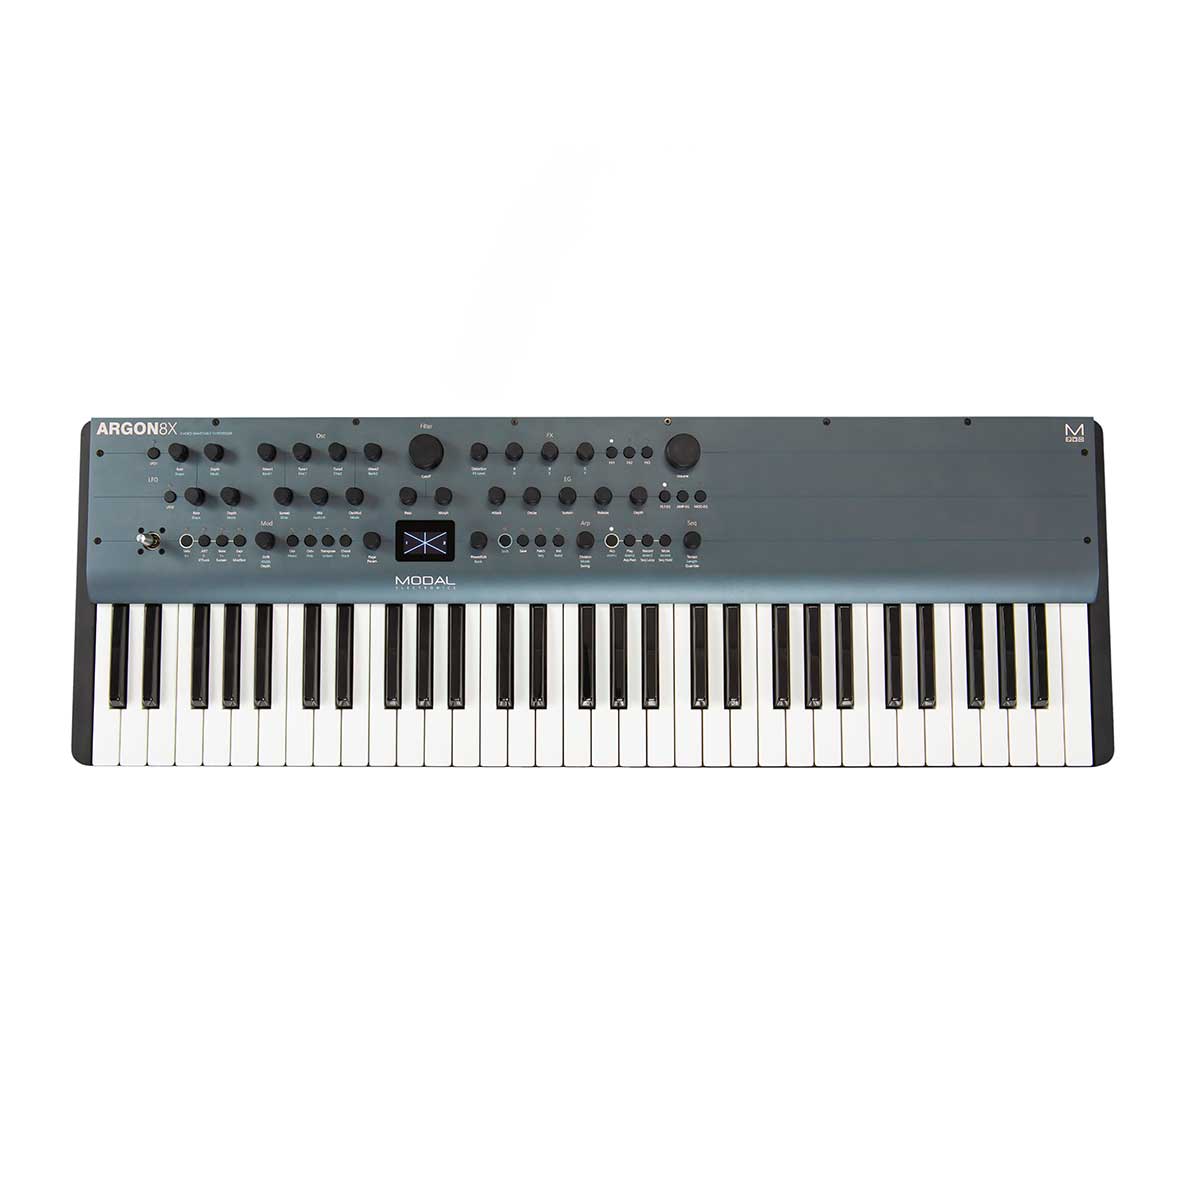 Modal ARGON8X 61-key Synthesizer